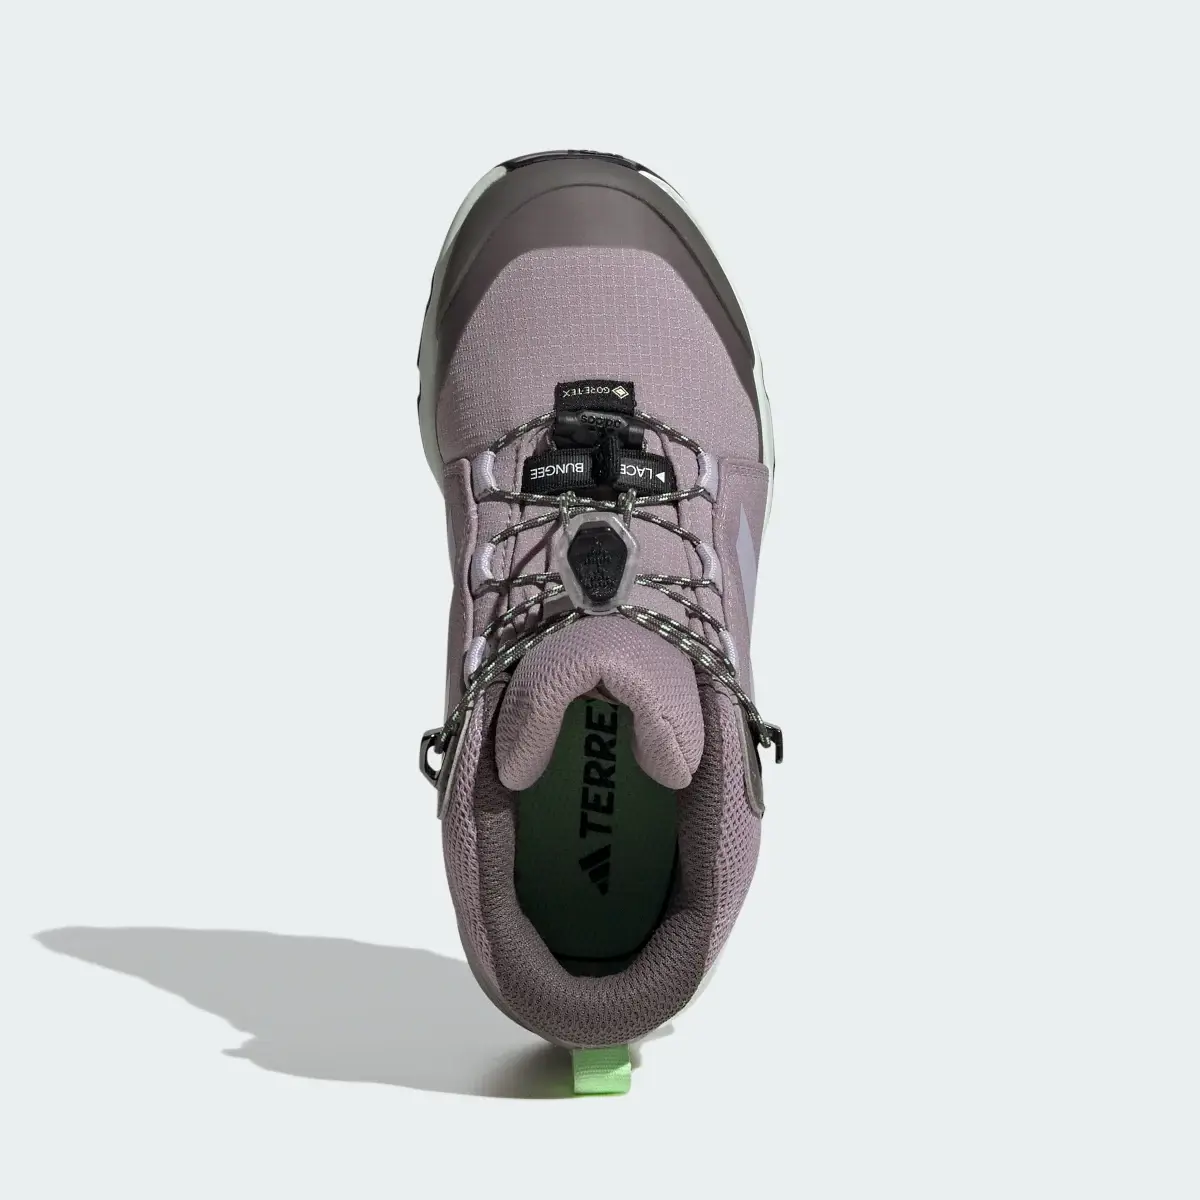 Adidas Chaussure de randonnée Organizer Mid GORE-TEX. 3